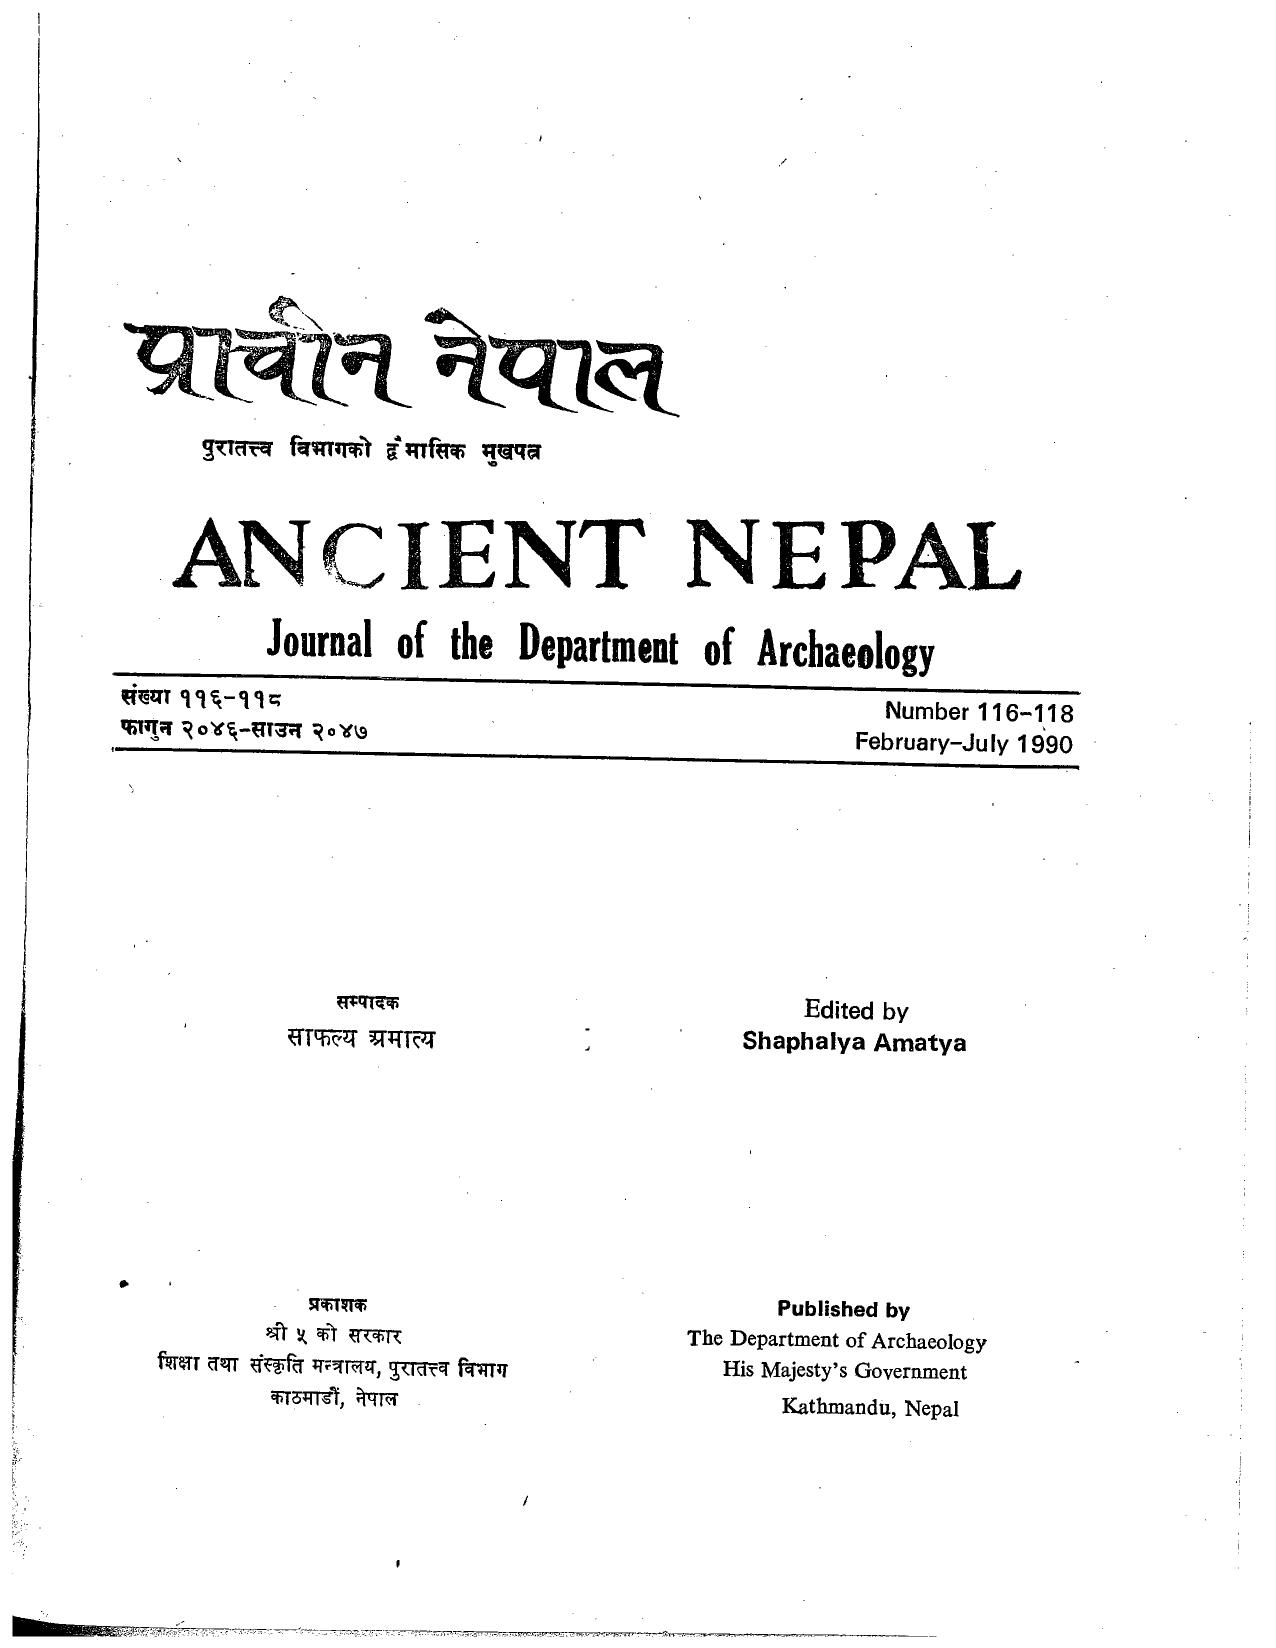 Ancient Nepal 116-118